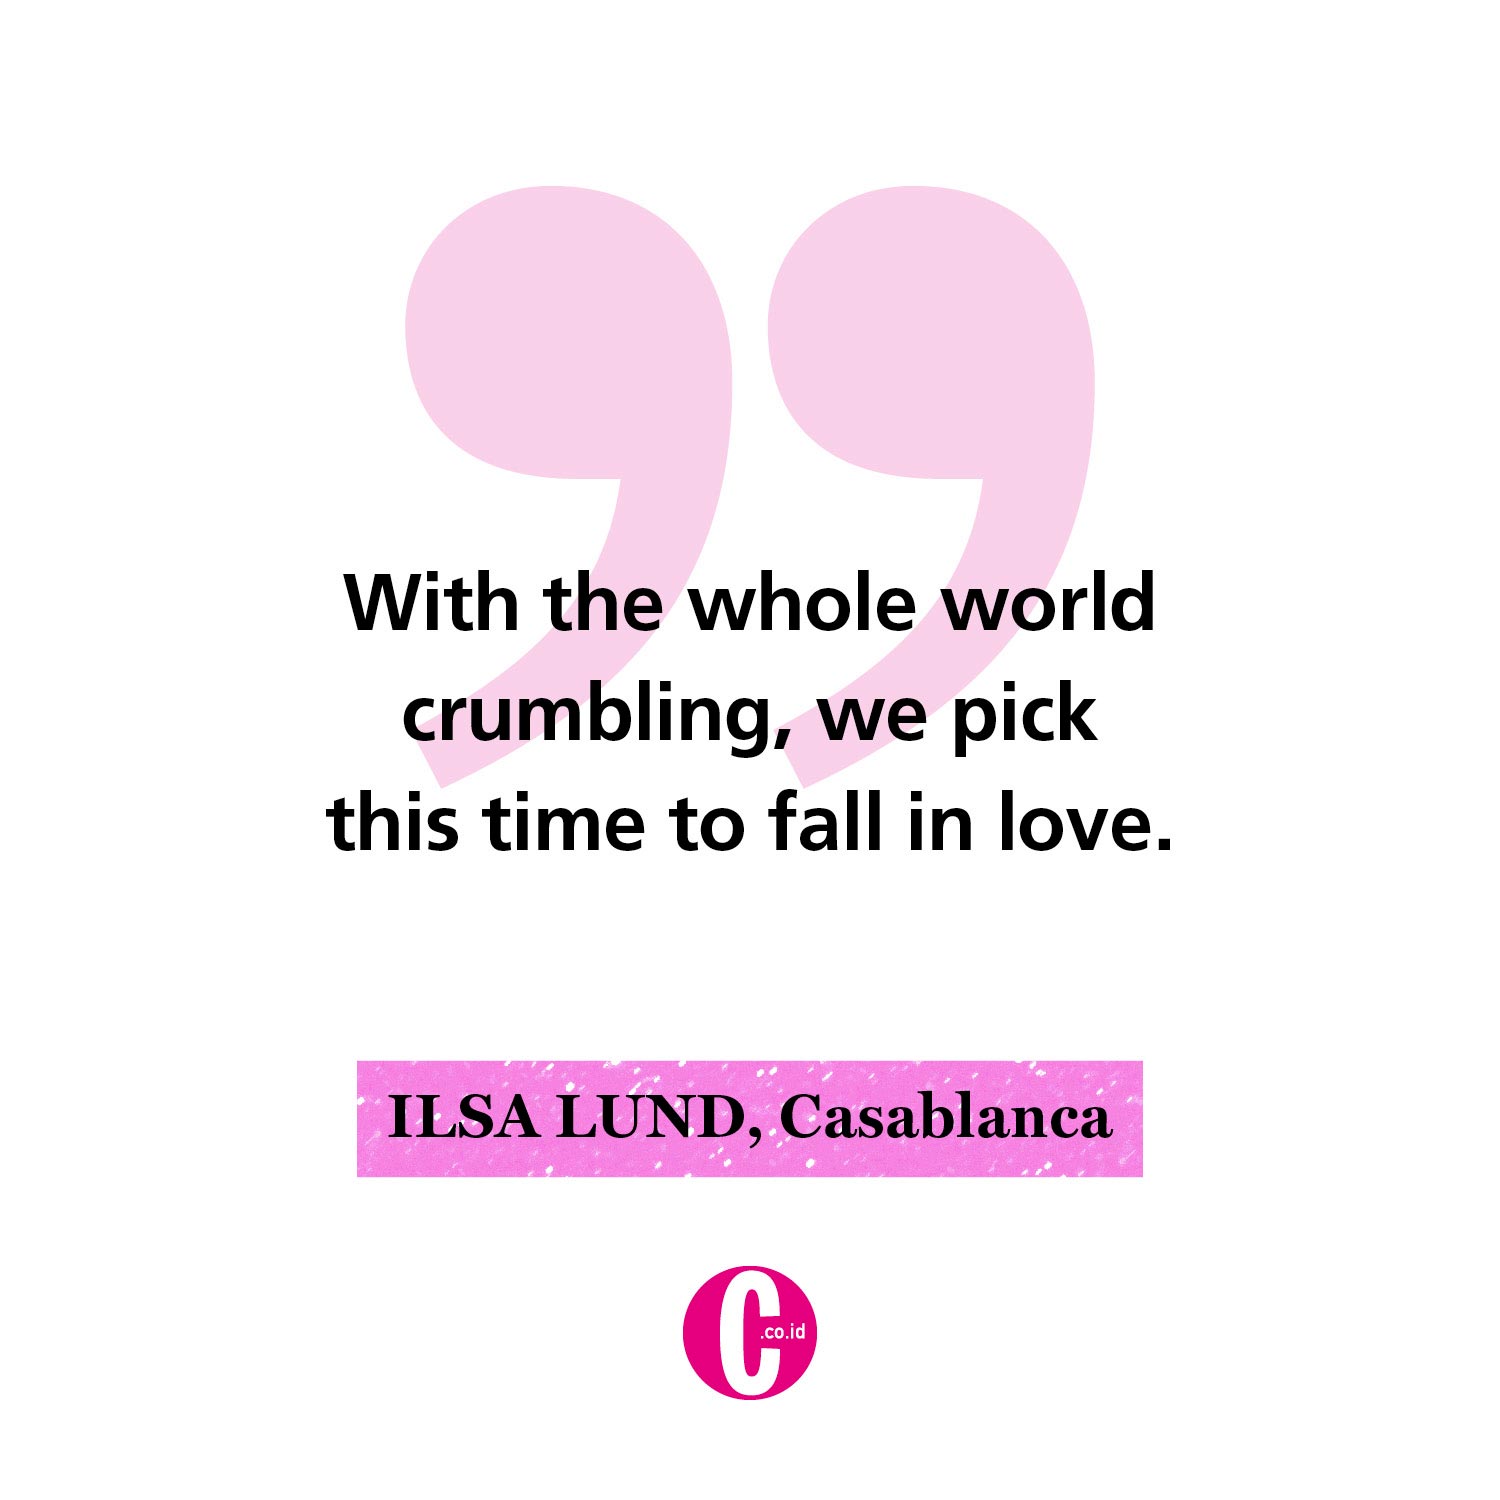 Kata-kata romantis dari Ilsa Lund, Casablanca